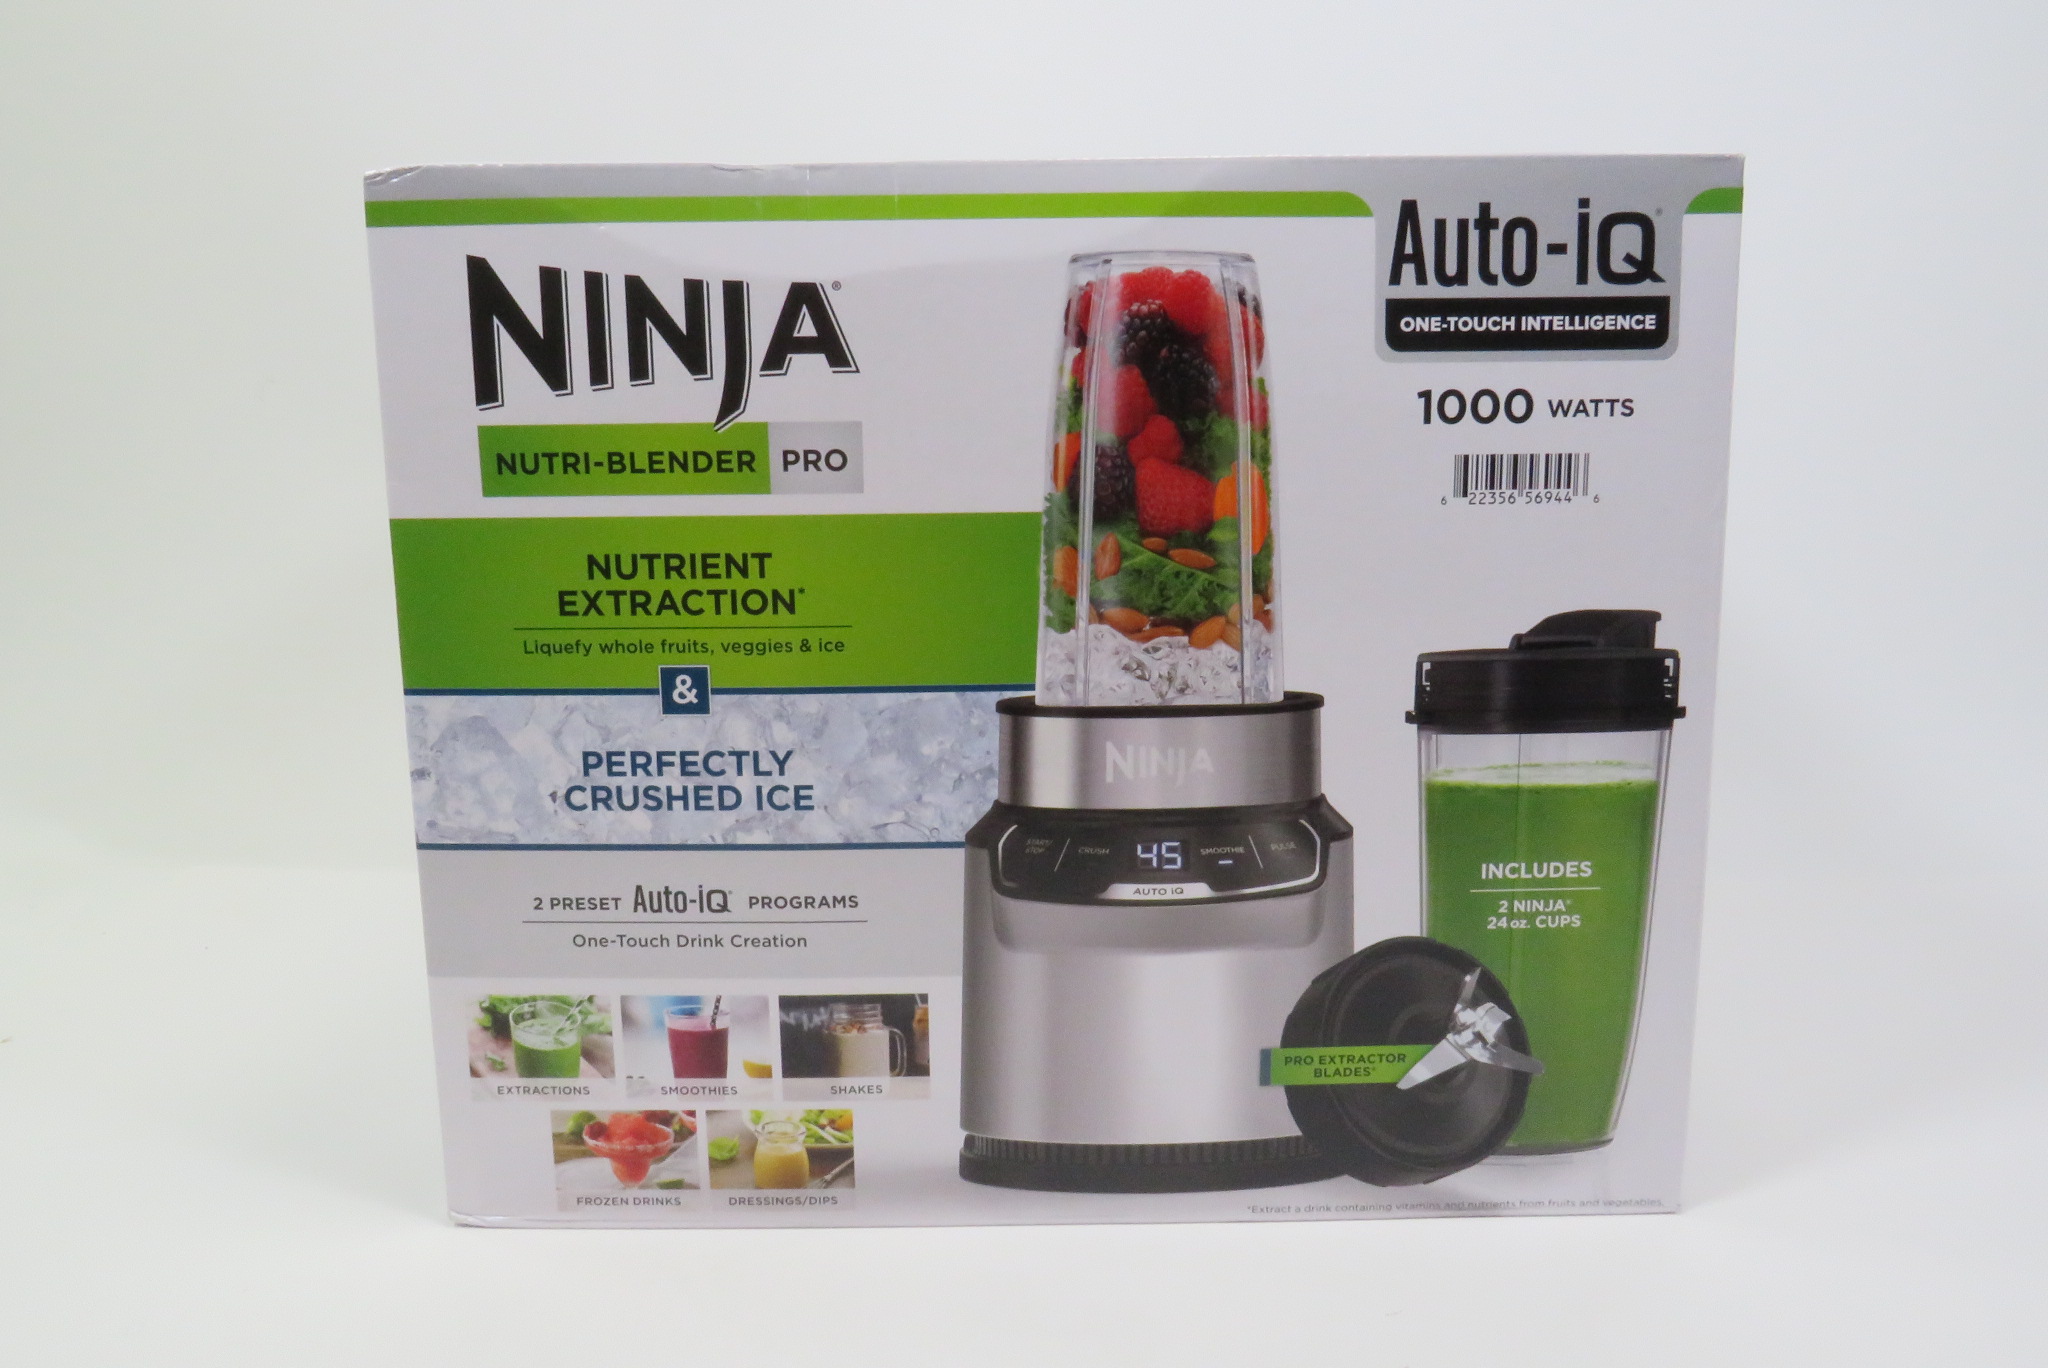 Ninja Nutri-Blender Pro with Auto-iQ - BN401